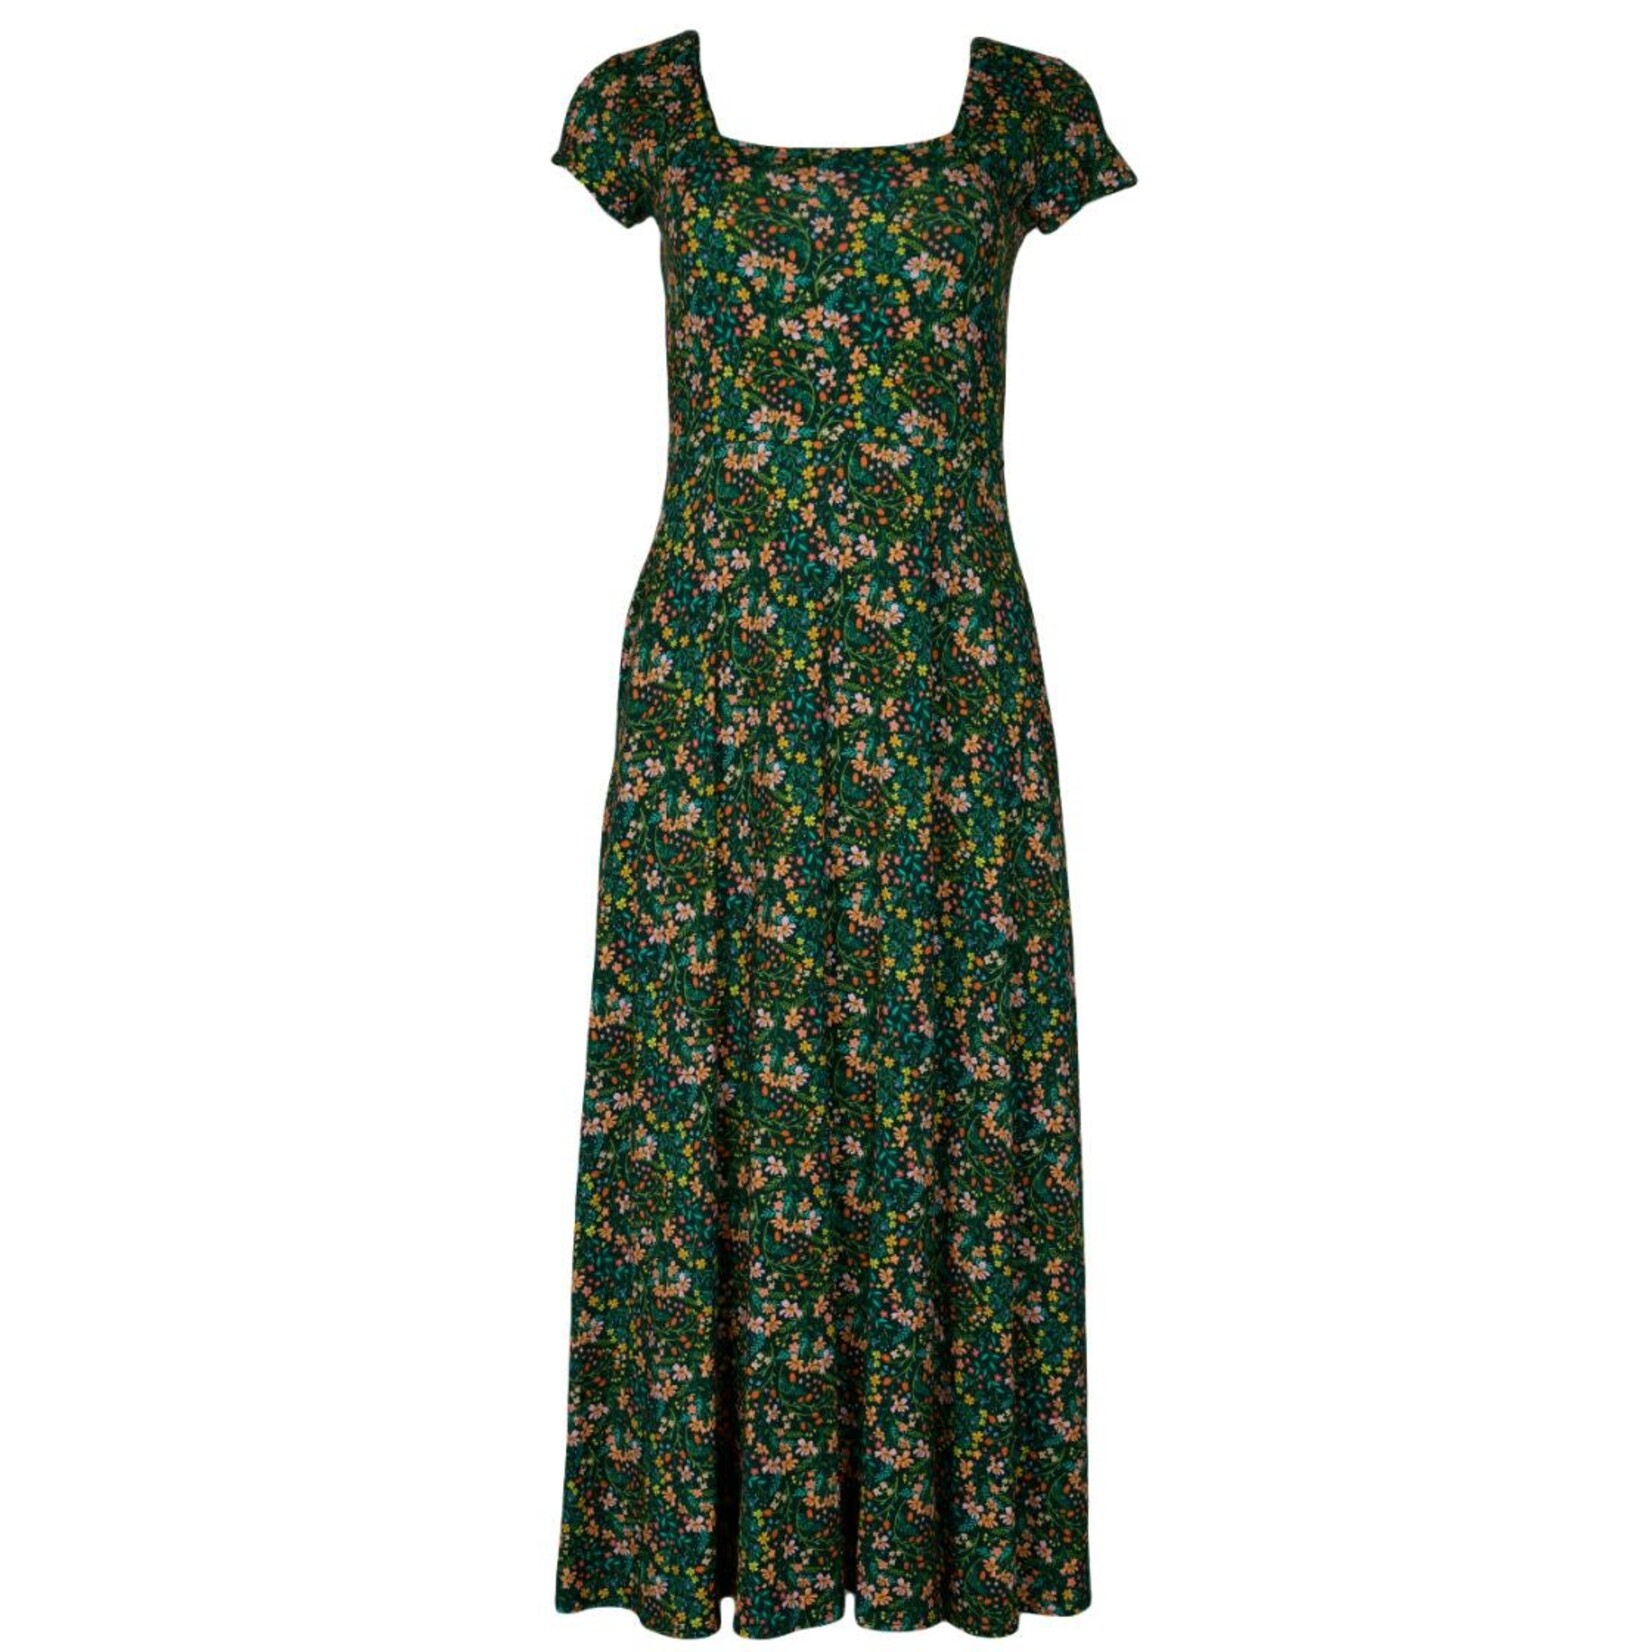 Salaam Brigitte Short-Sleeve Floral Dress in Green